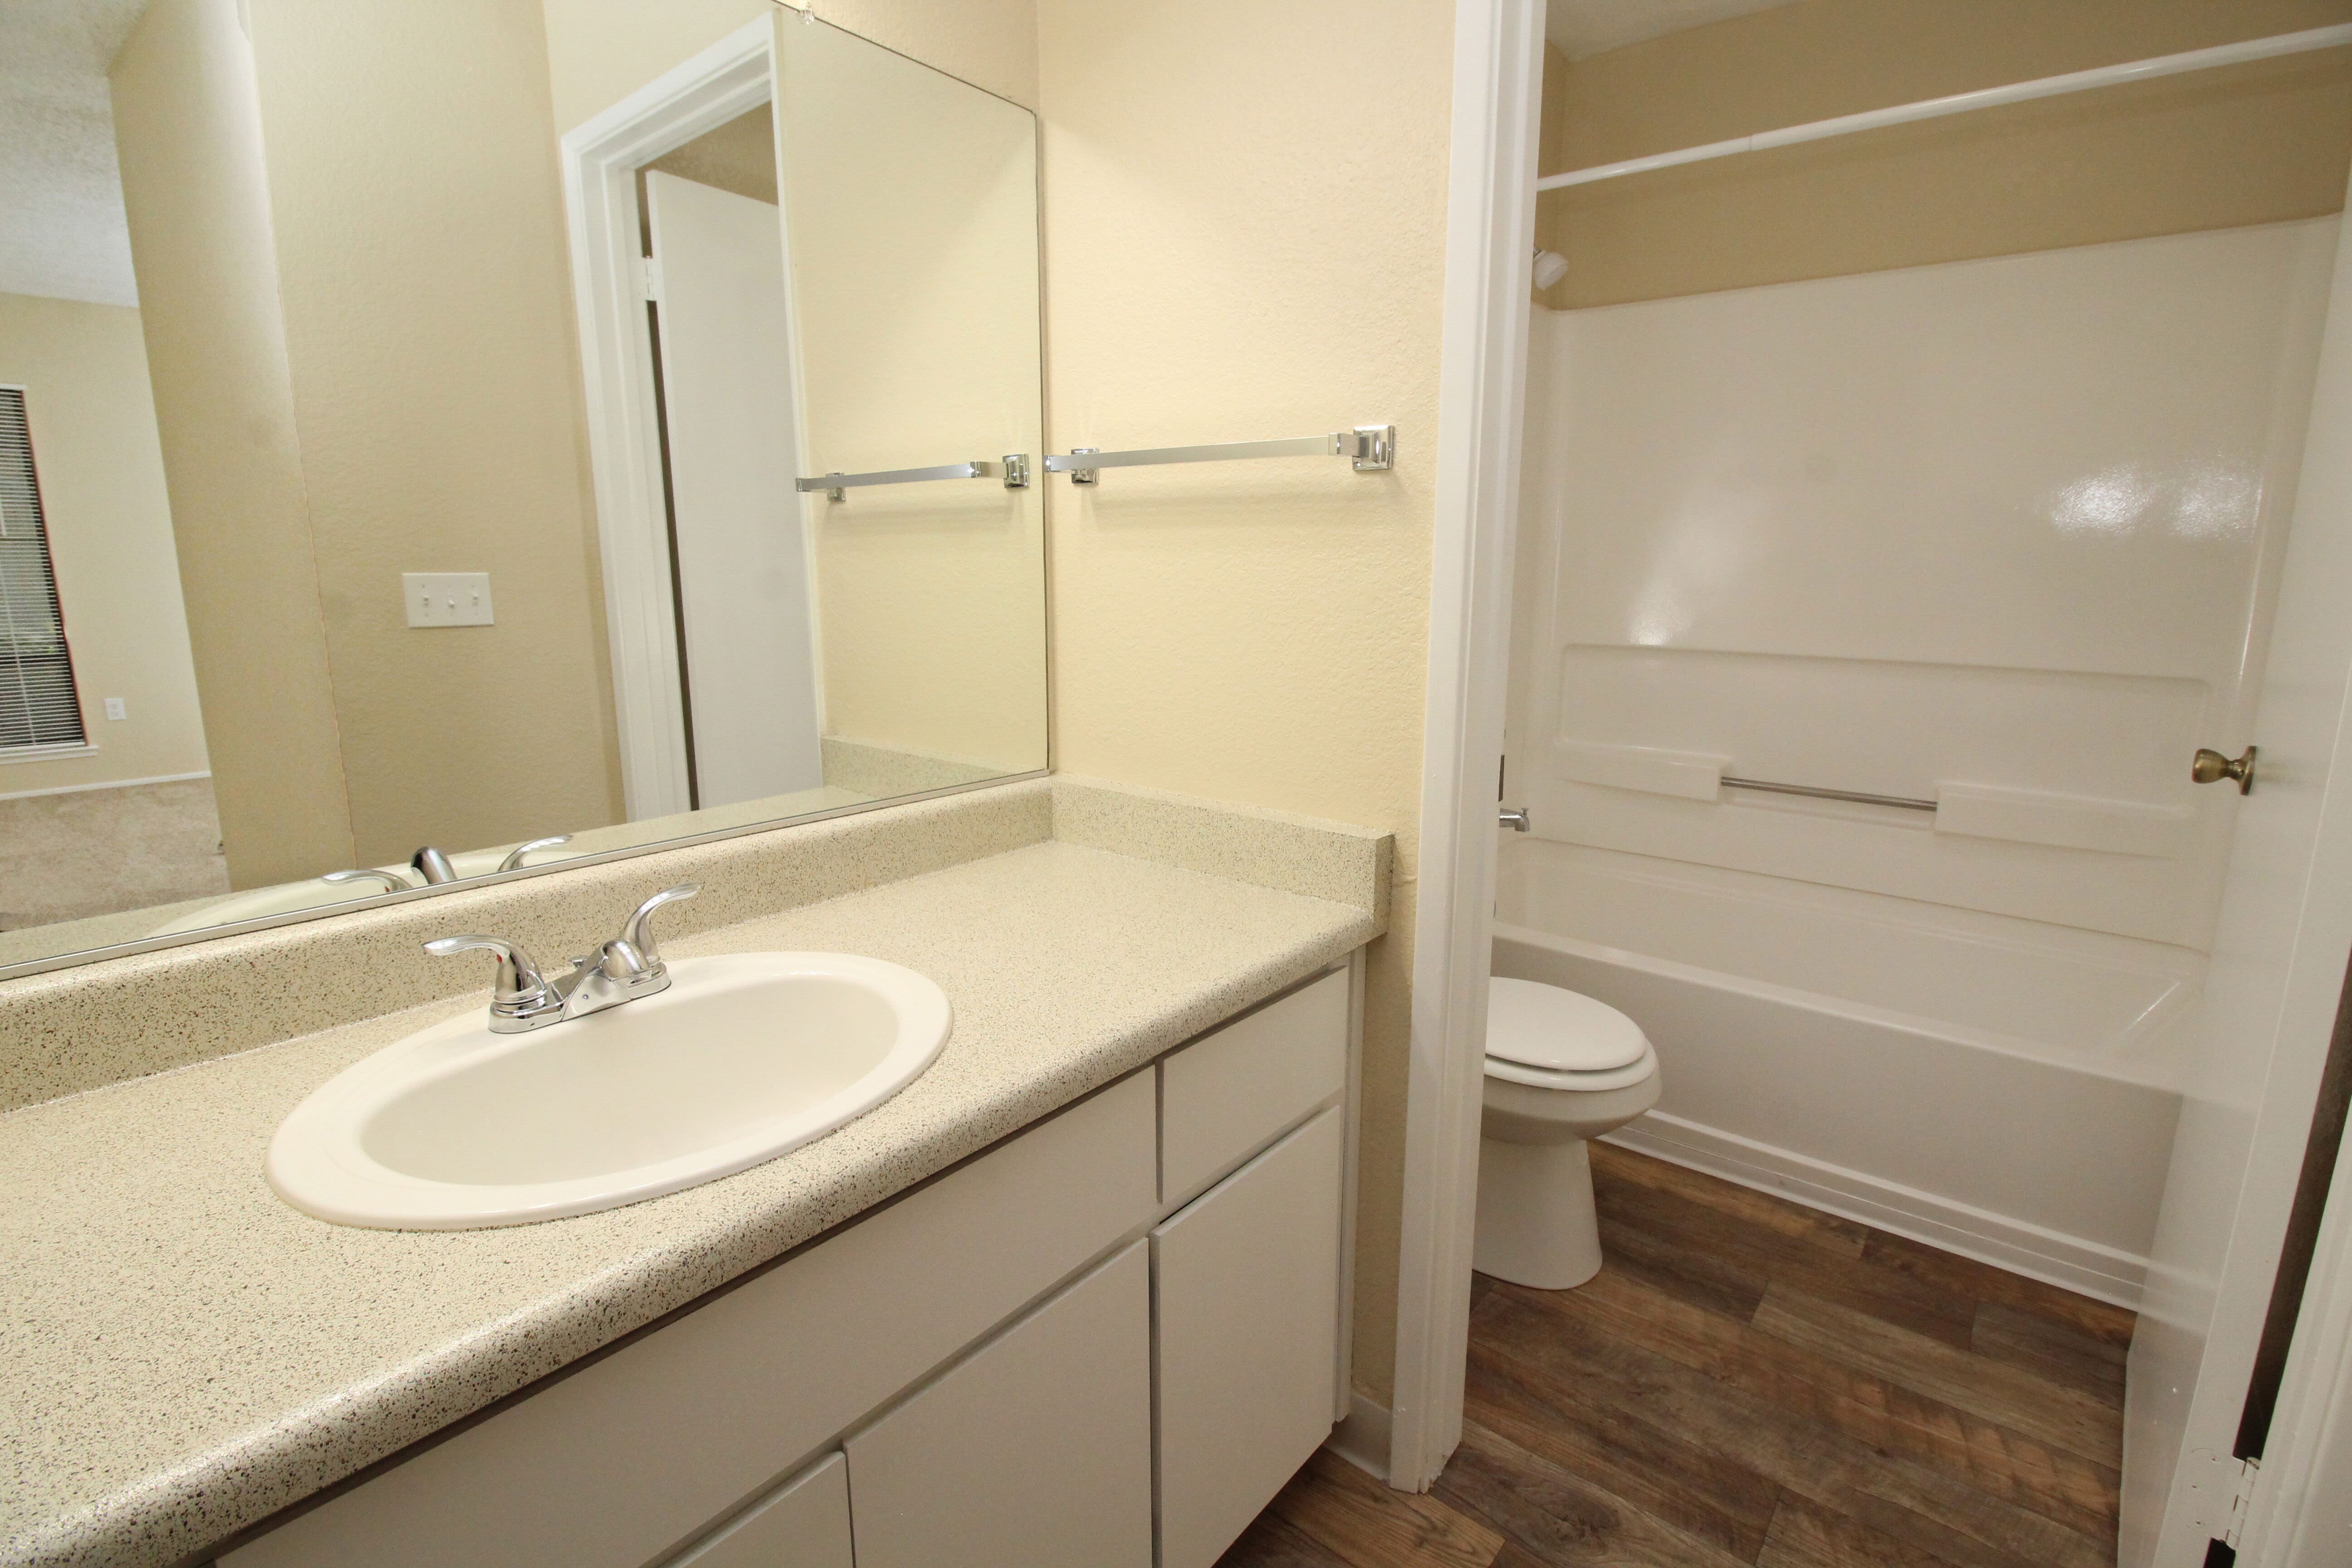 Bathroom and shower at Huntcliffe Apartments in Fair Oaks, California